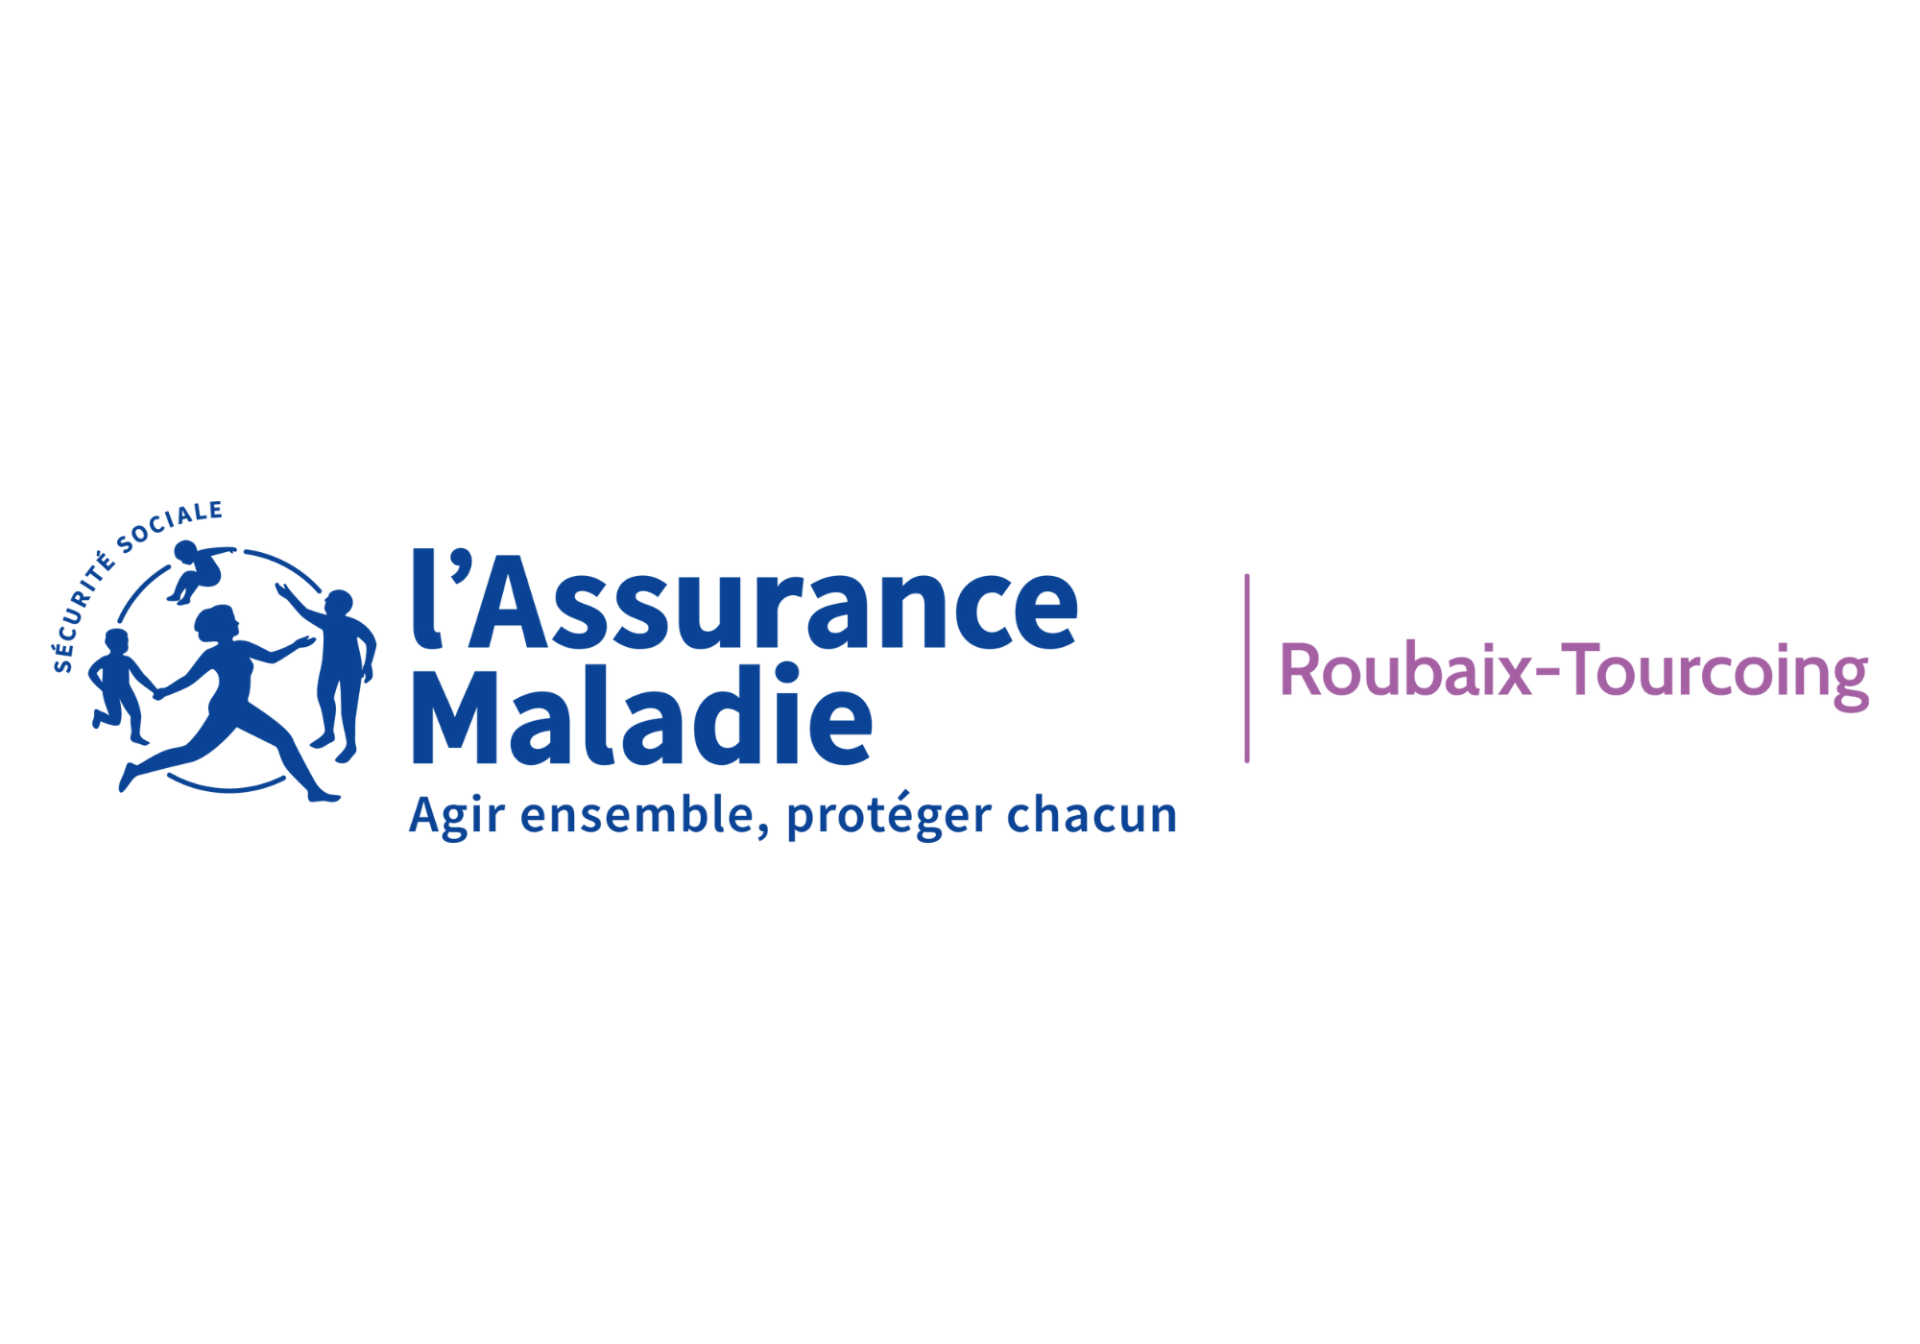 Assurance Maladie Roubaix - Tourcoing